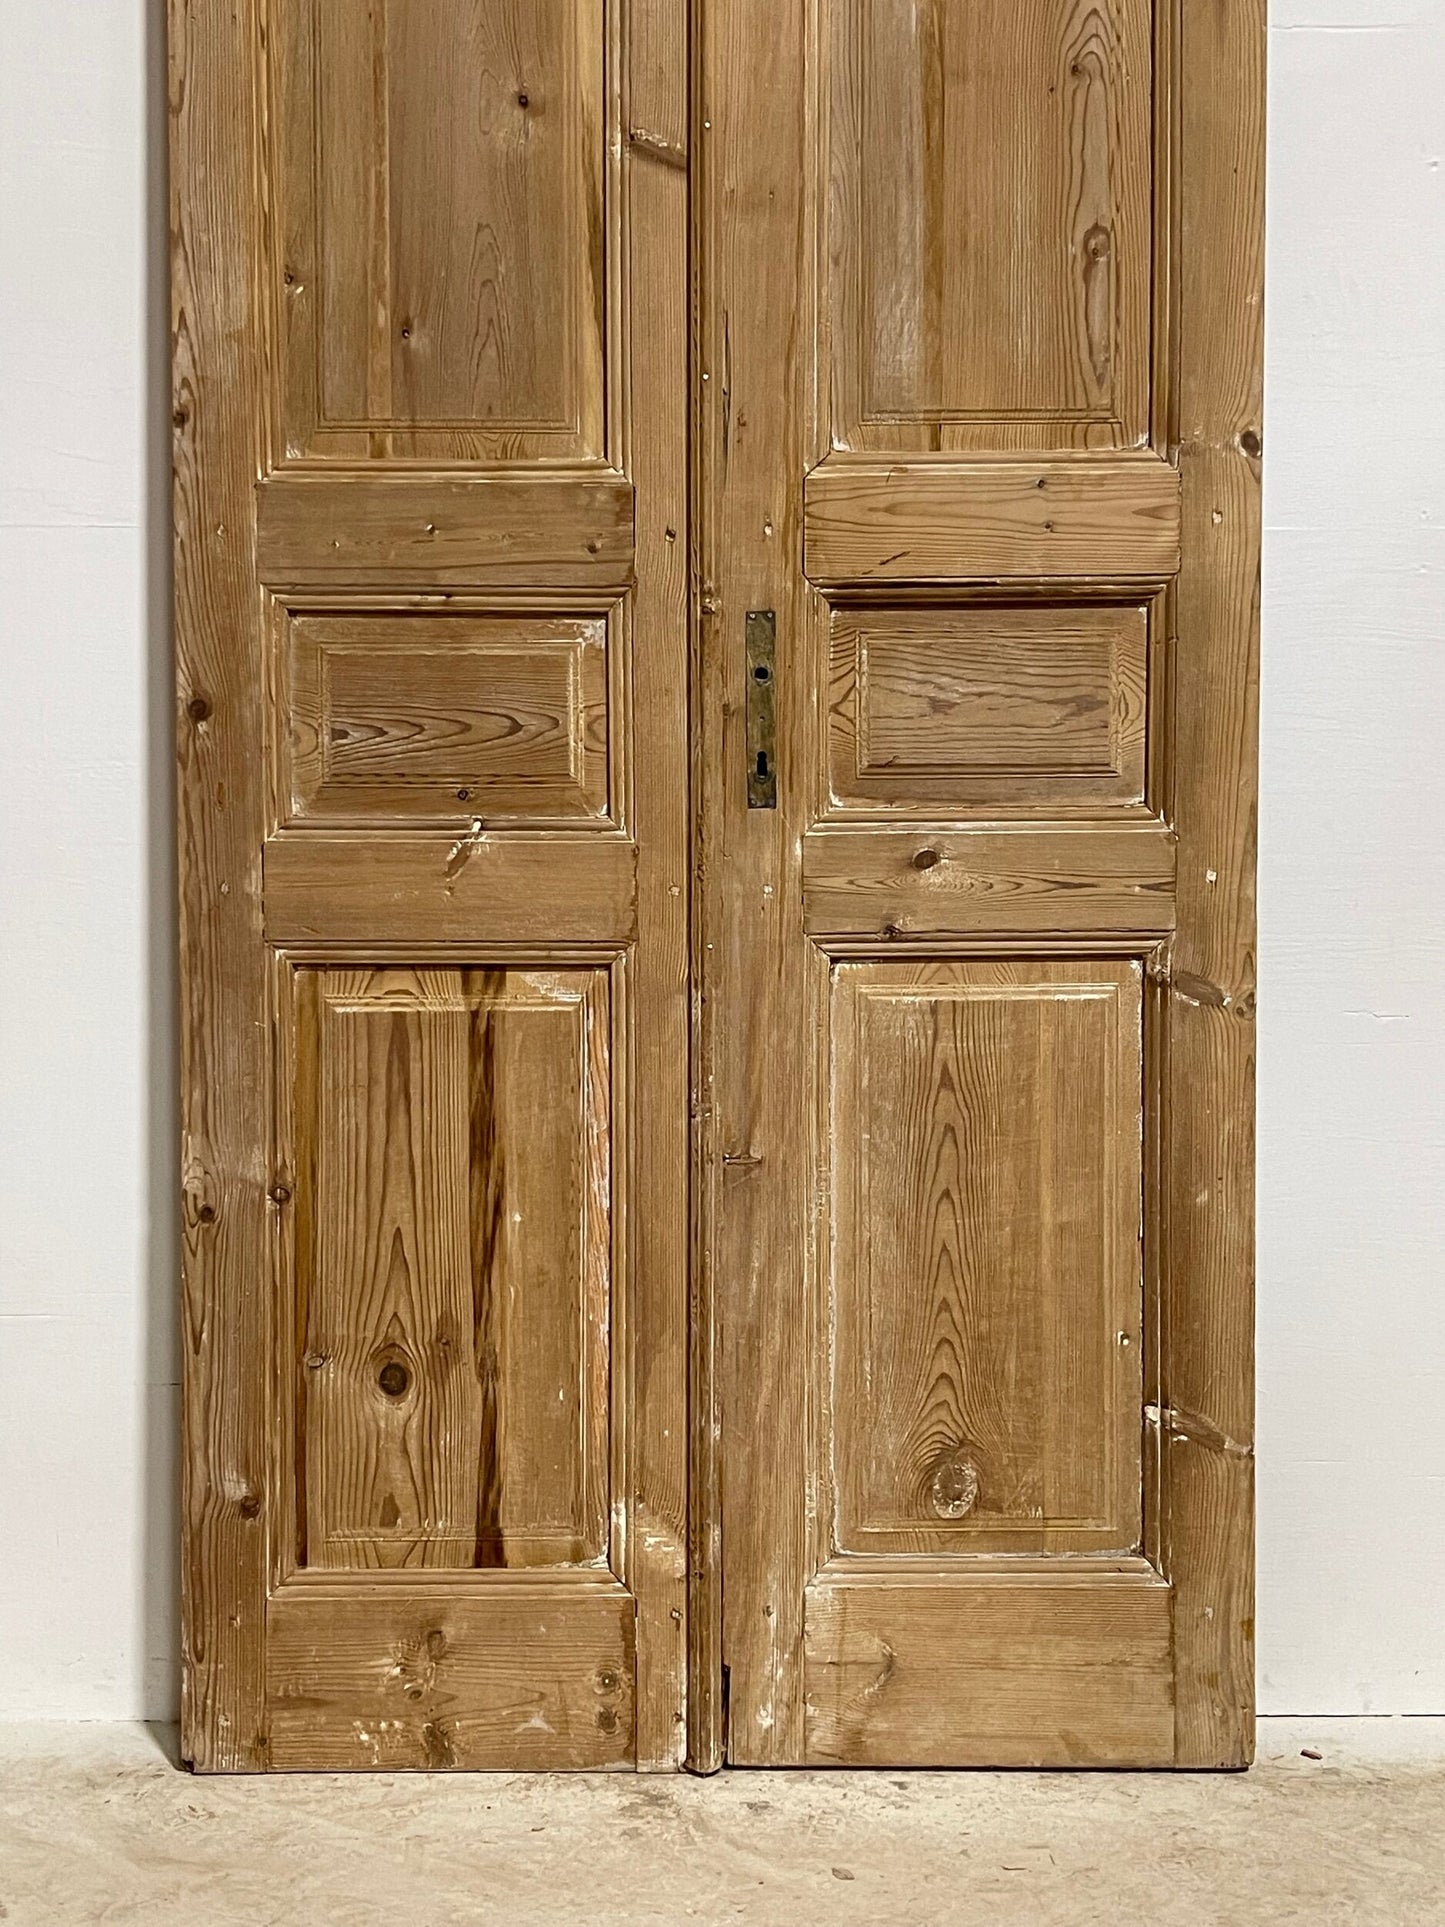 Antique French doors (92.75x41.25) H0159s